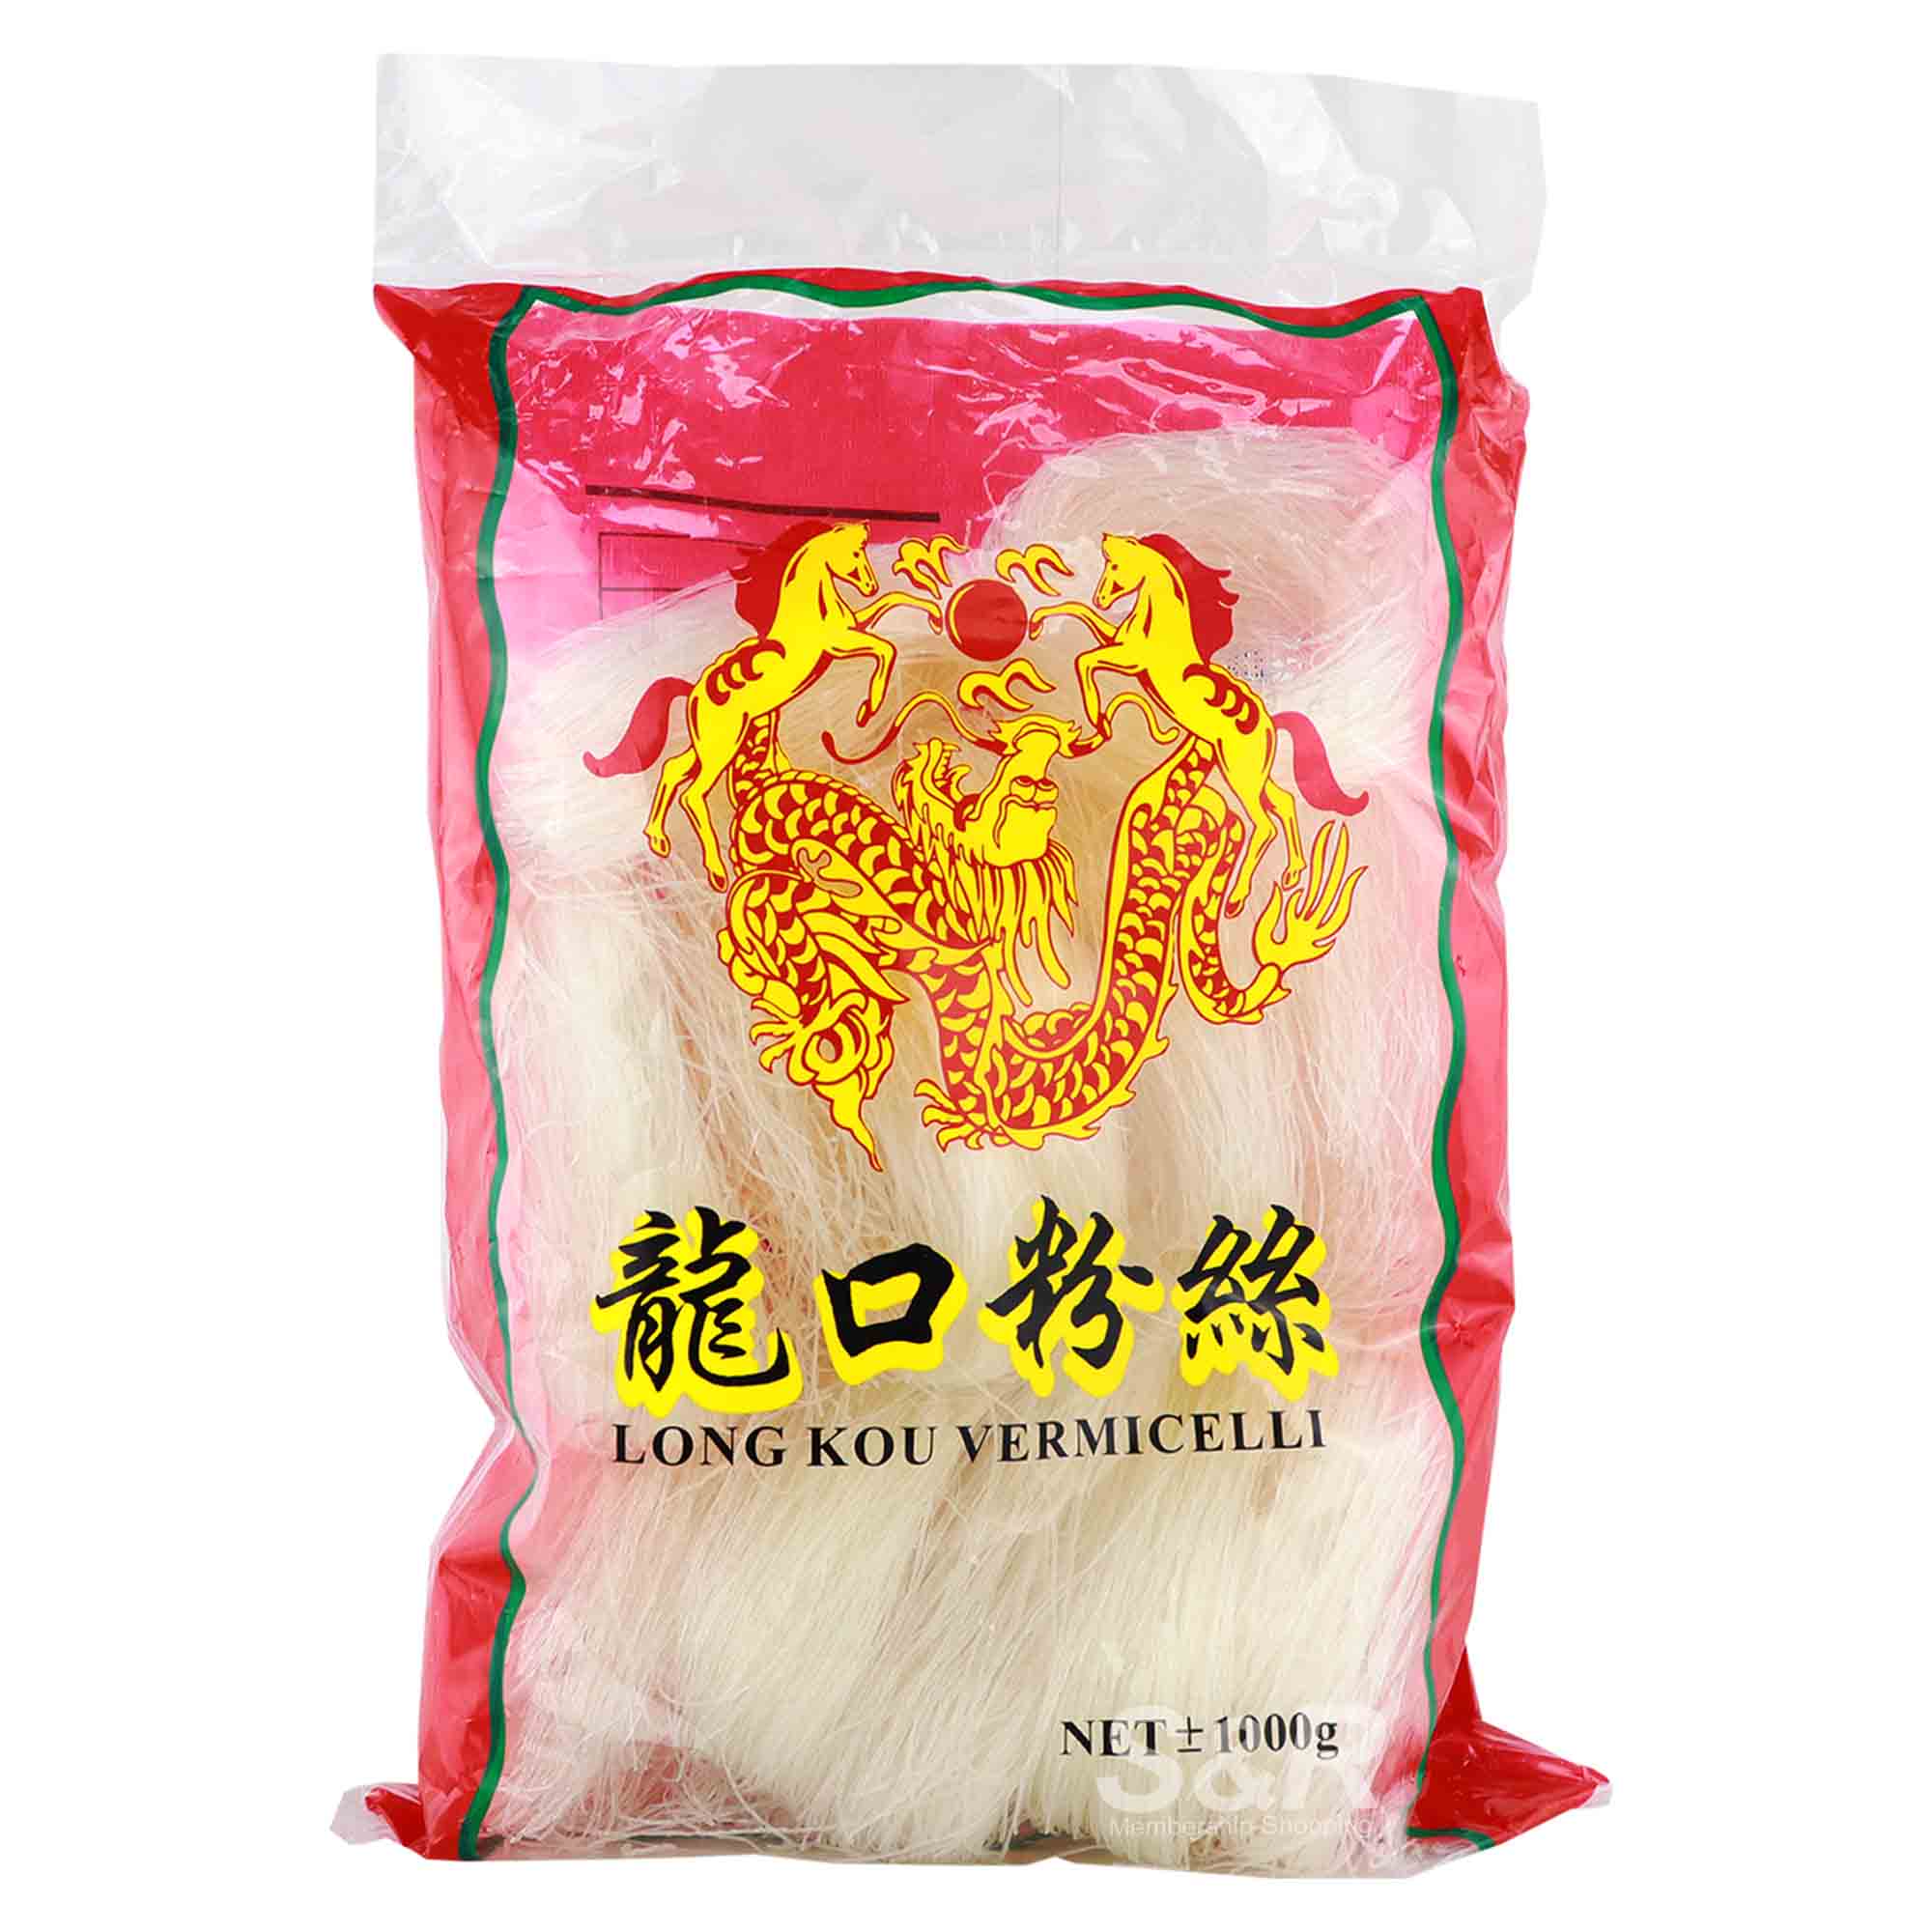 Long Kou Vermicelli Noodles 1kg